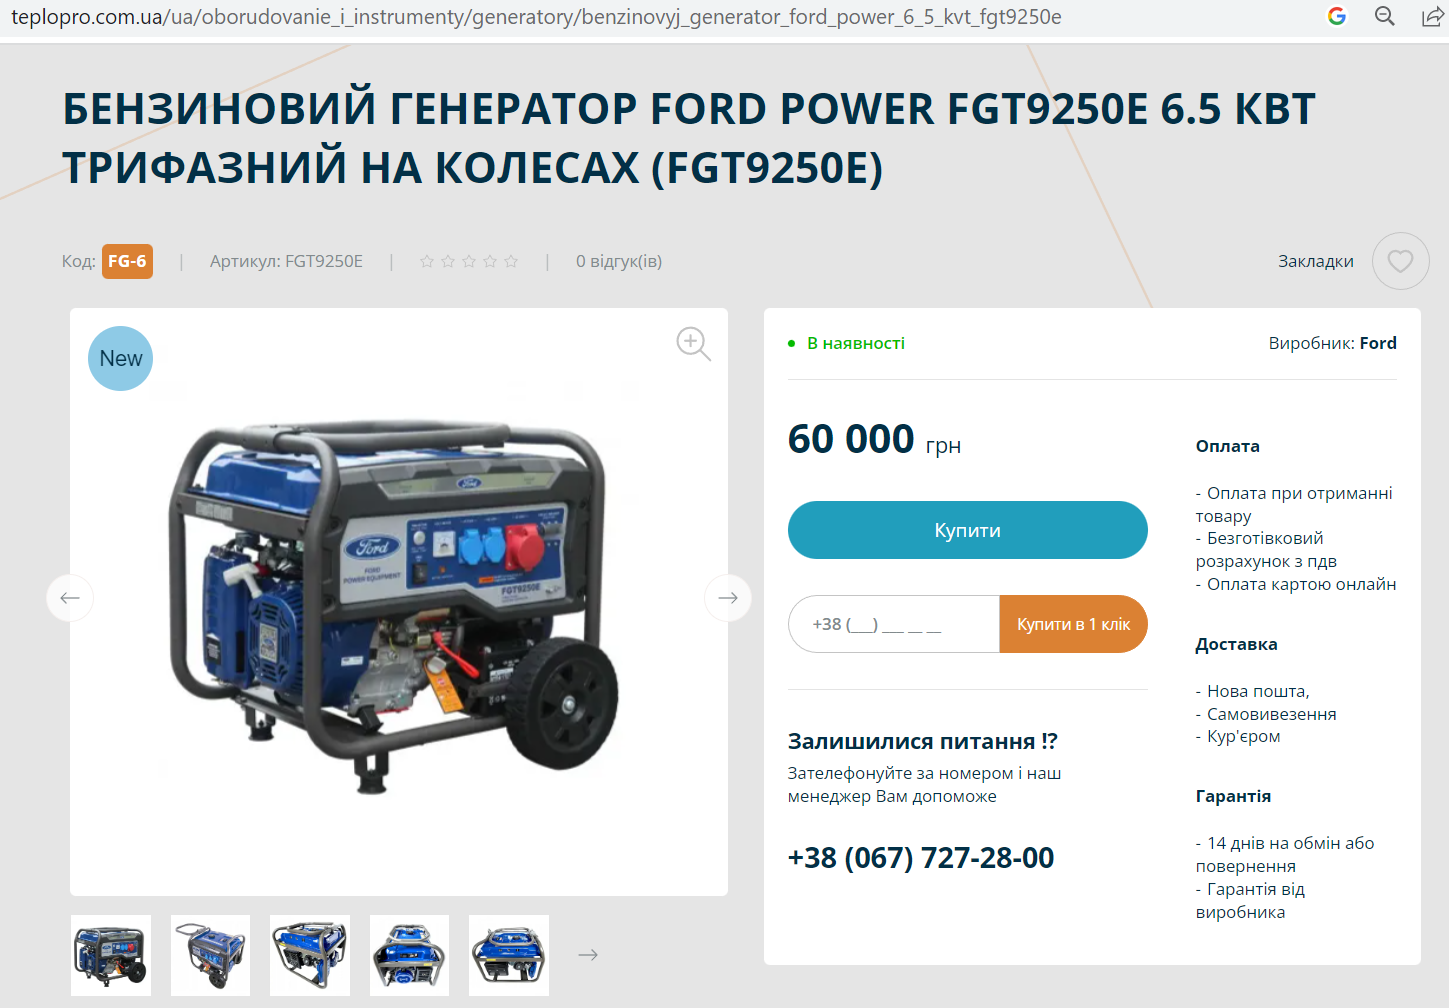 Dneprovodokanal purchased expensive generators